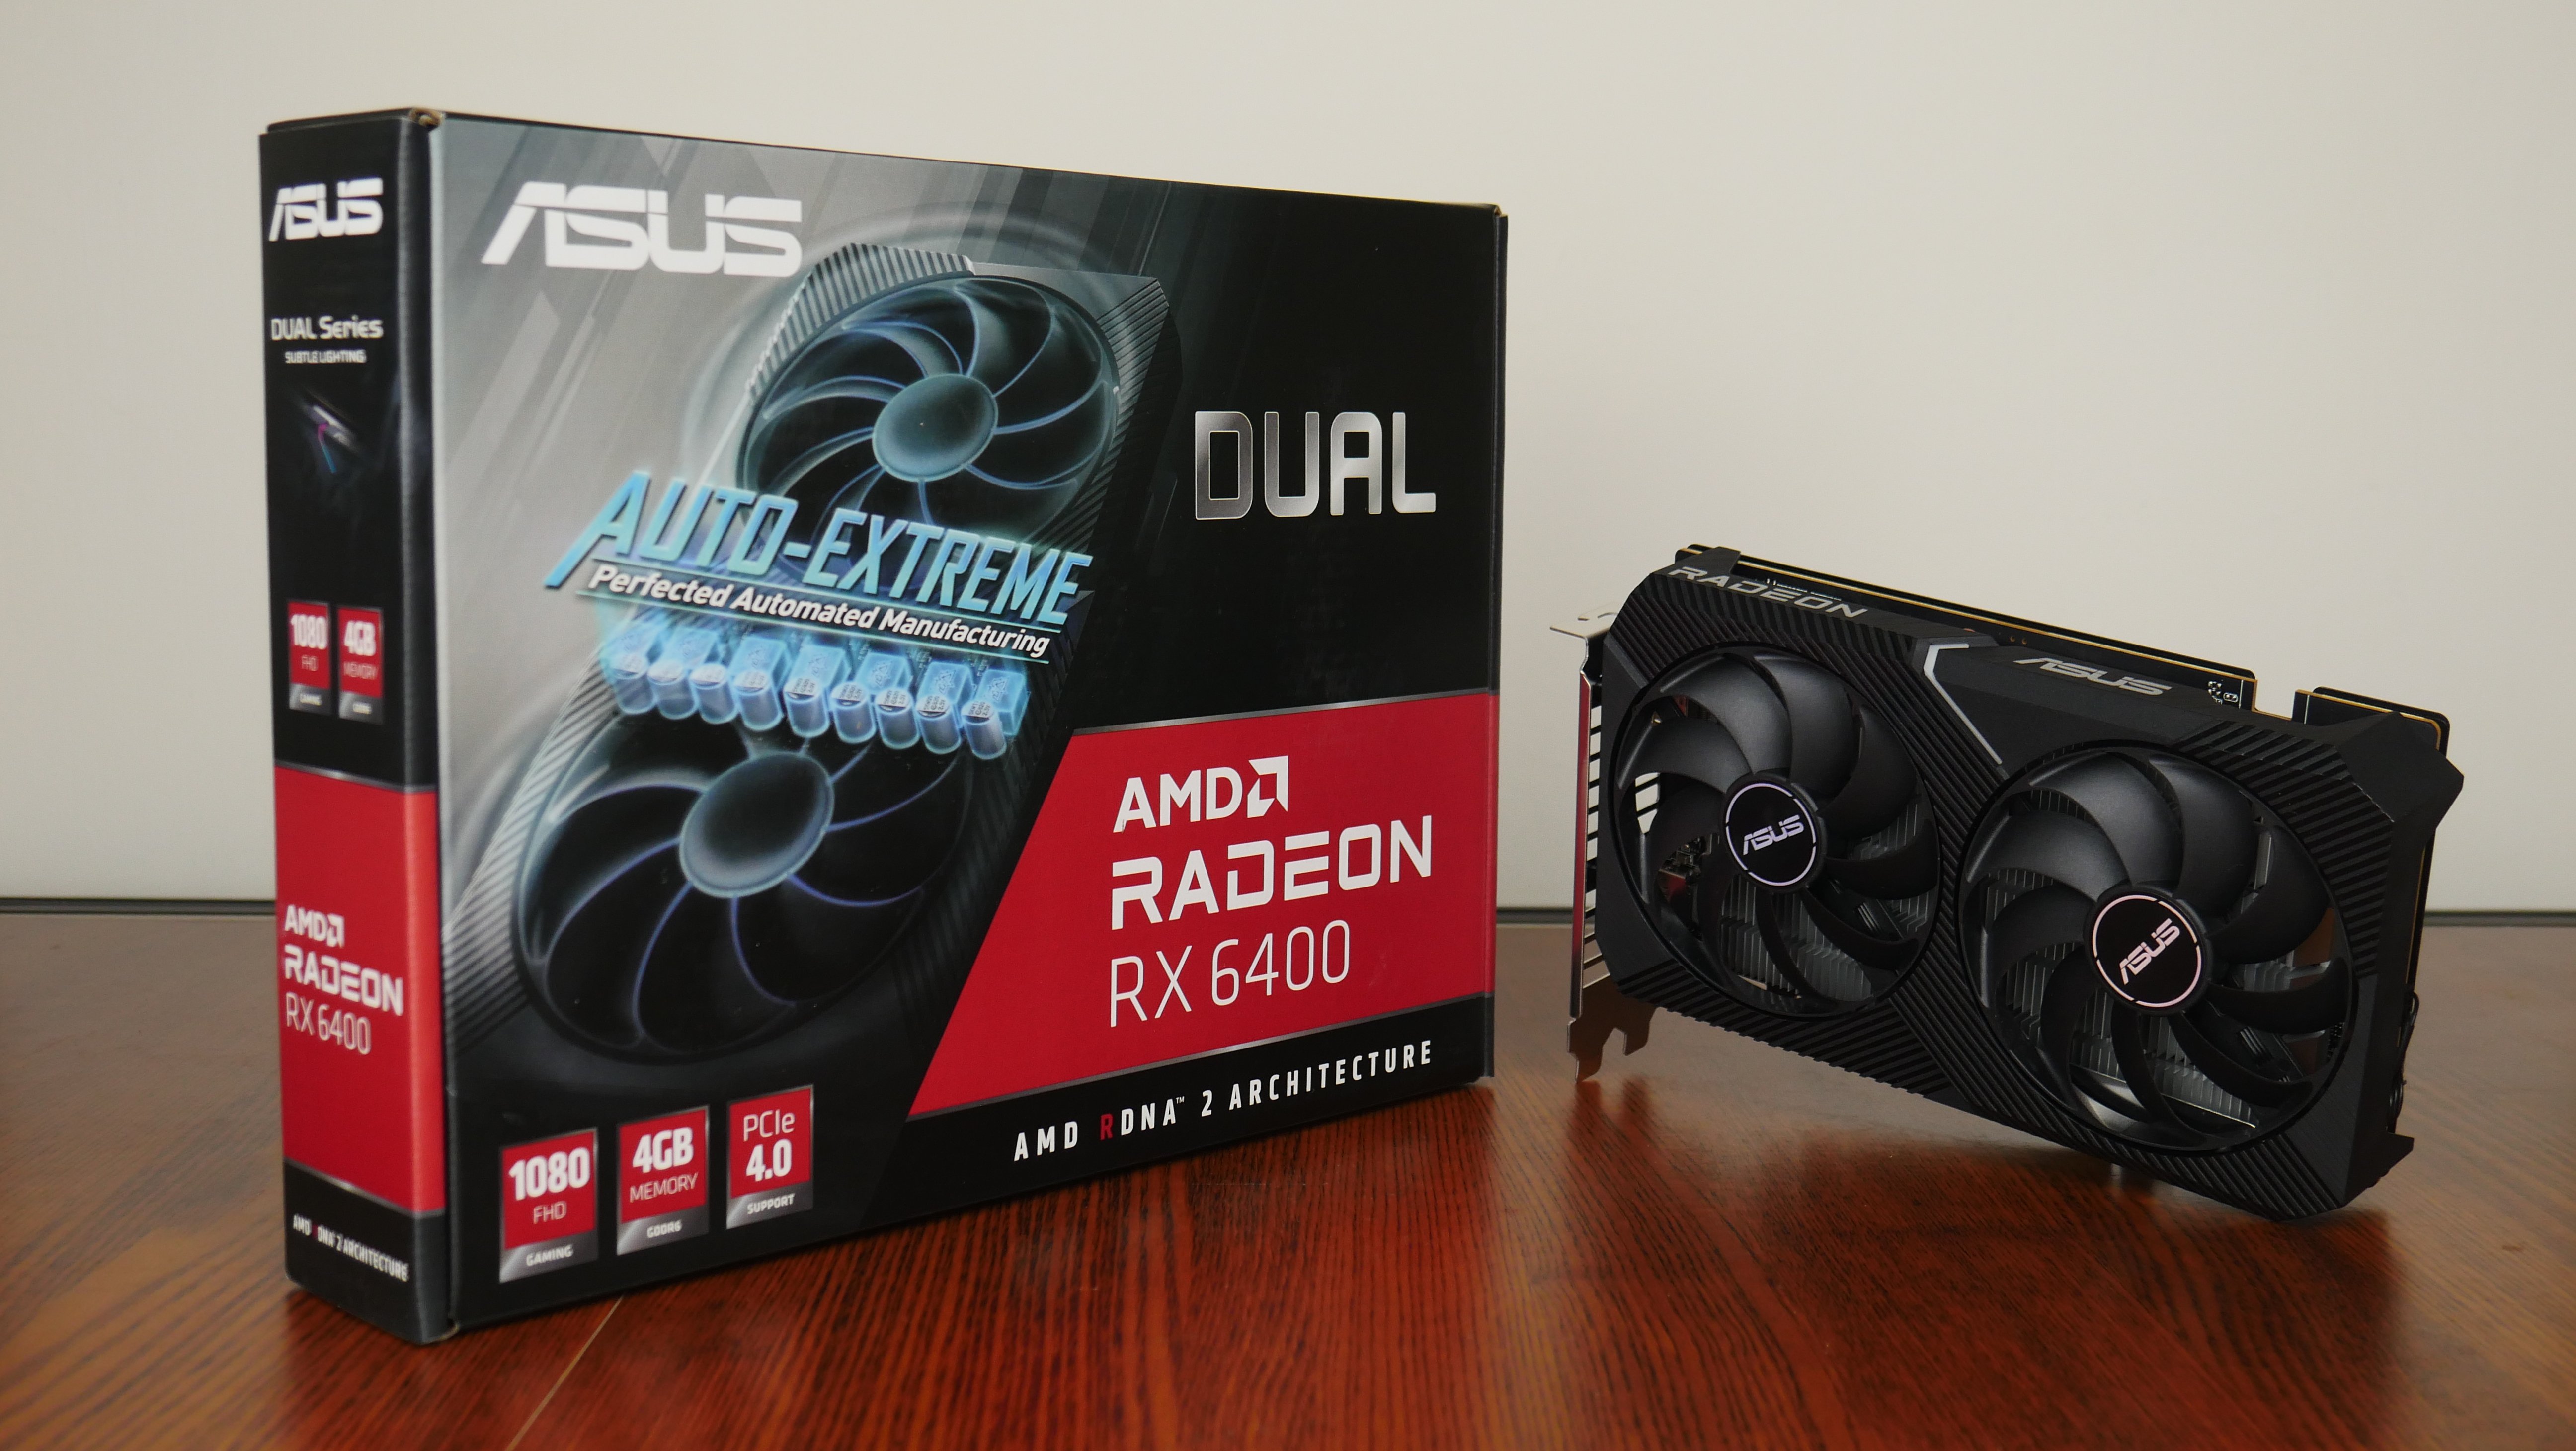 ASUS Dual AMD Radeon RX 6650 XT OC Edition Gaming Graphics Card (AMD RDNA  2, PCIe 4.0, 8GB GDDR6 Memory, HDMI 2.1, DisplayPort 1.4a, Axial-tech Fan